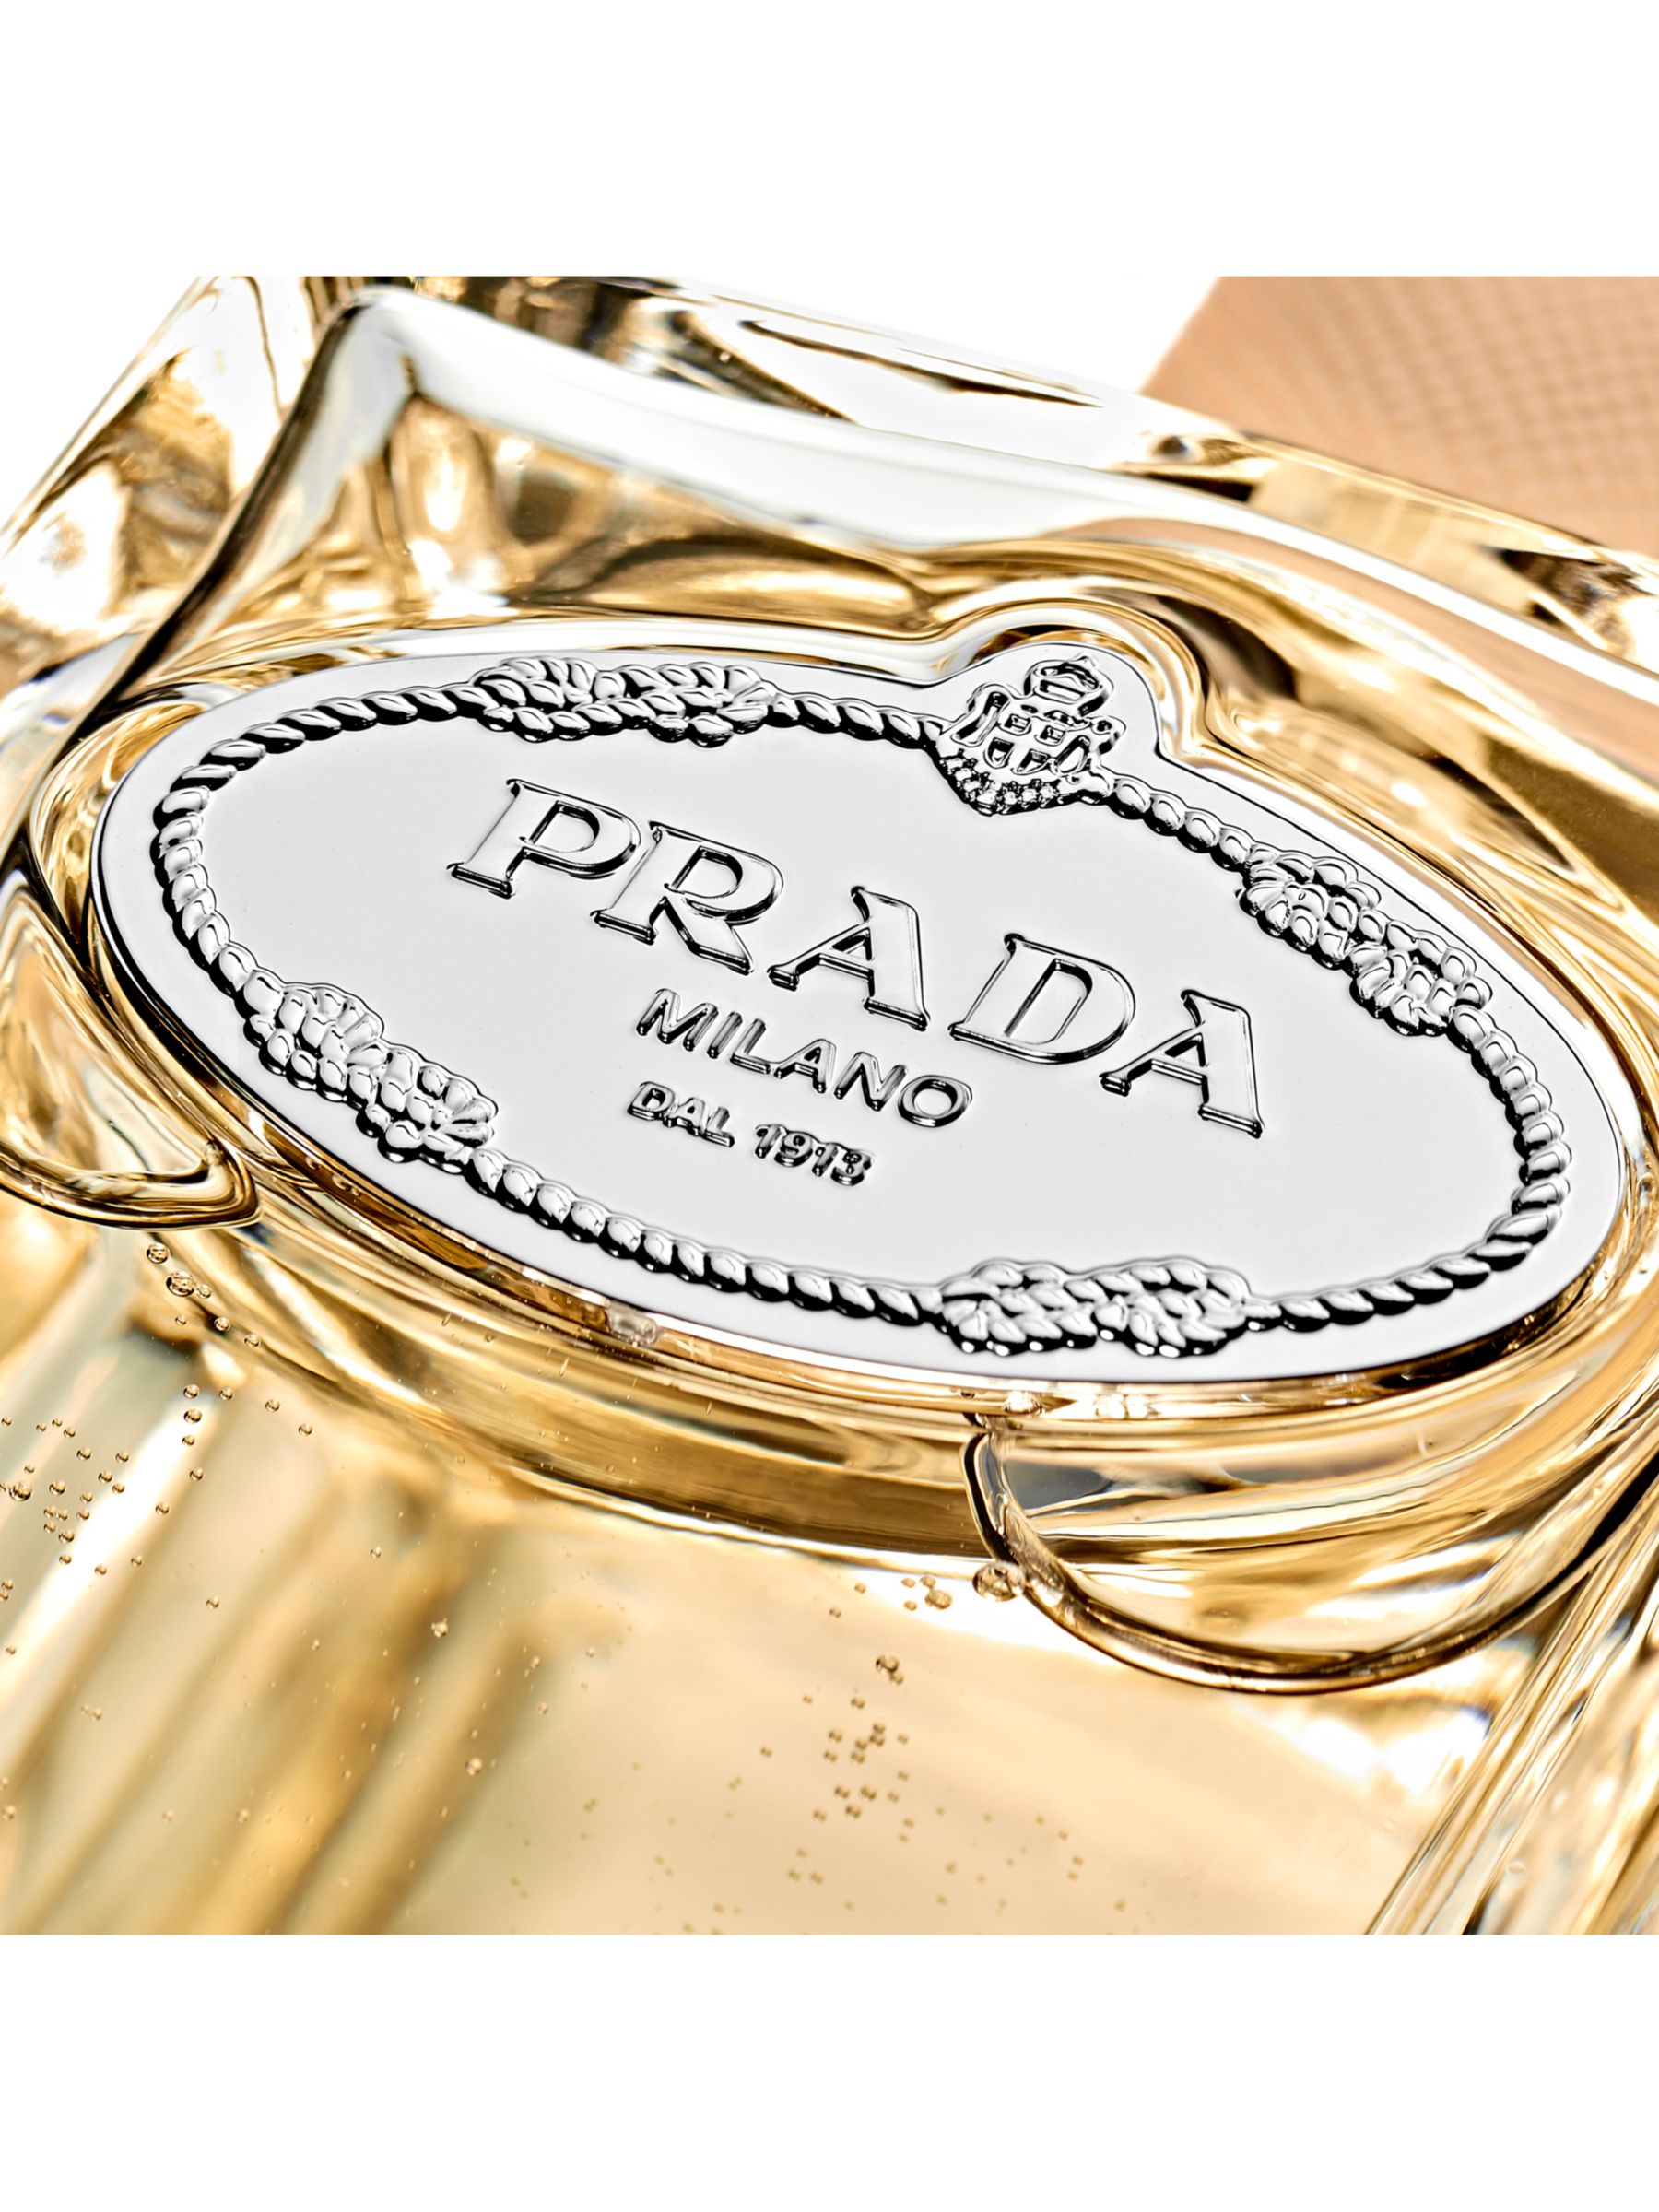 Prada Les Infusions de Prada Fleur D'Oranger Eau de Parfum, 100ml at John  Lewis & Partners